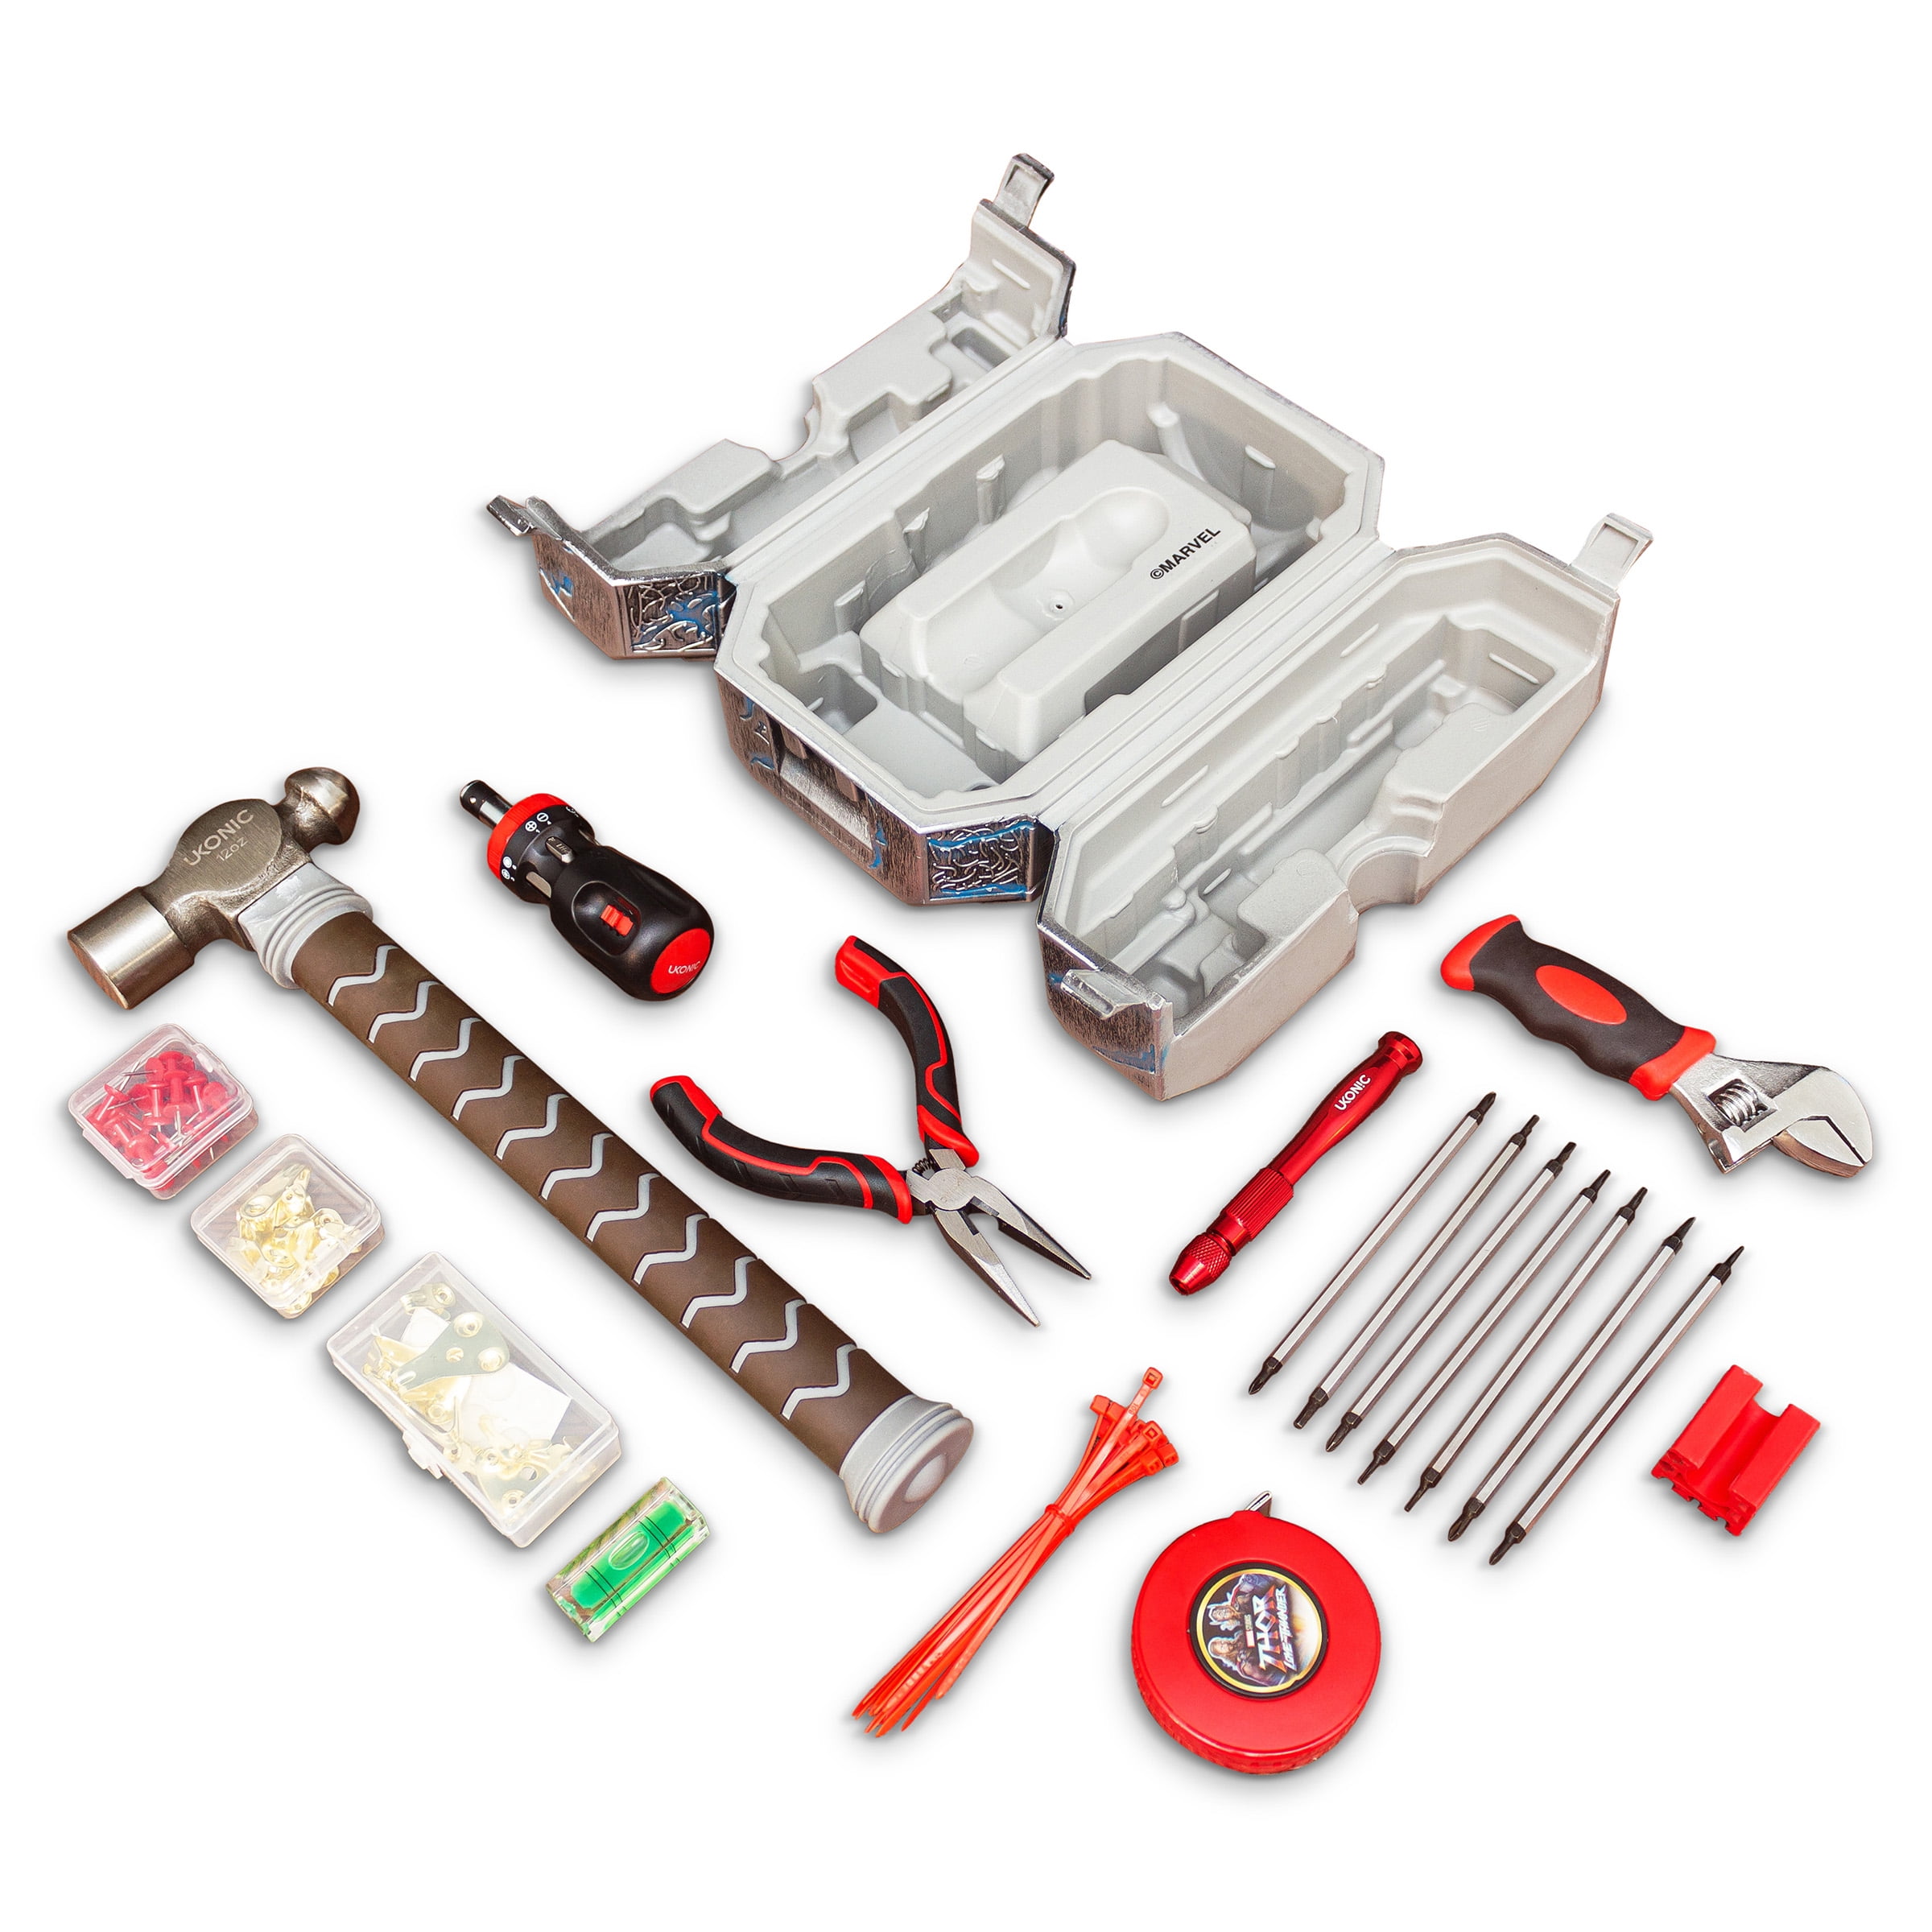 THOR Hammer Tool Kit – Dave's Geeky Ideas